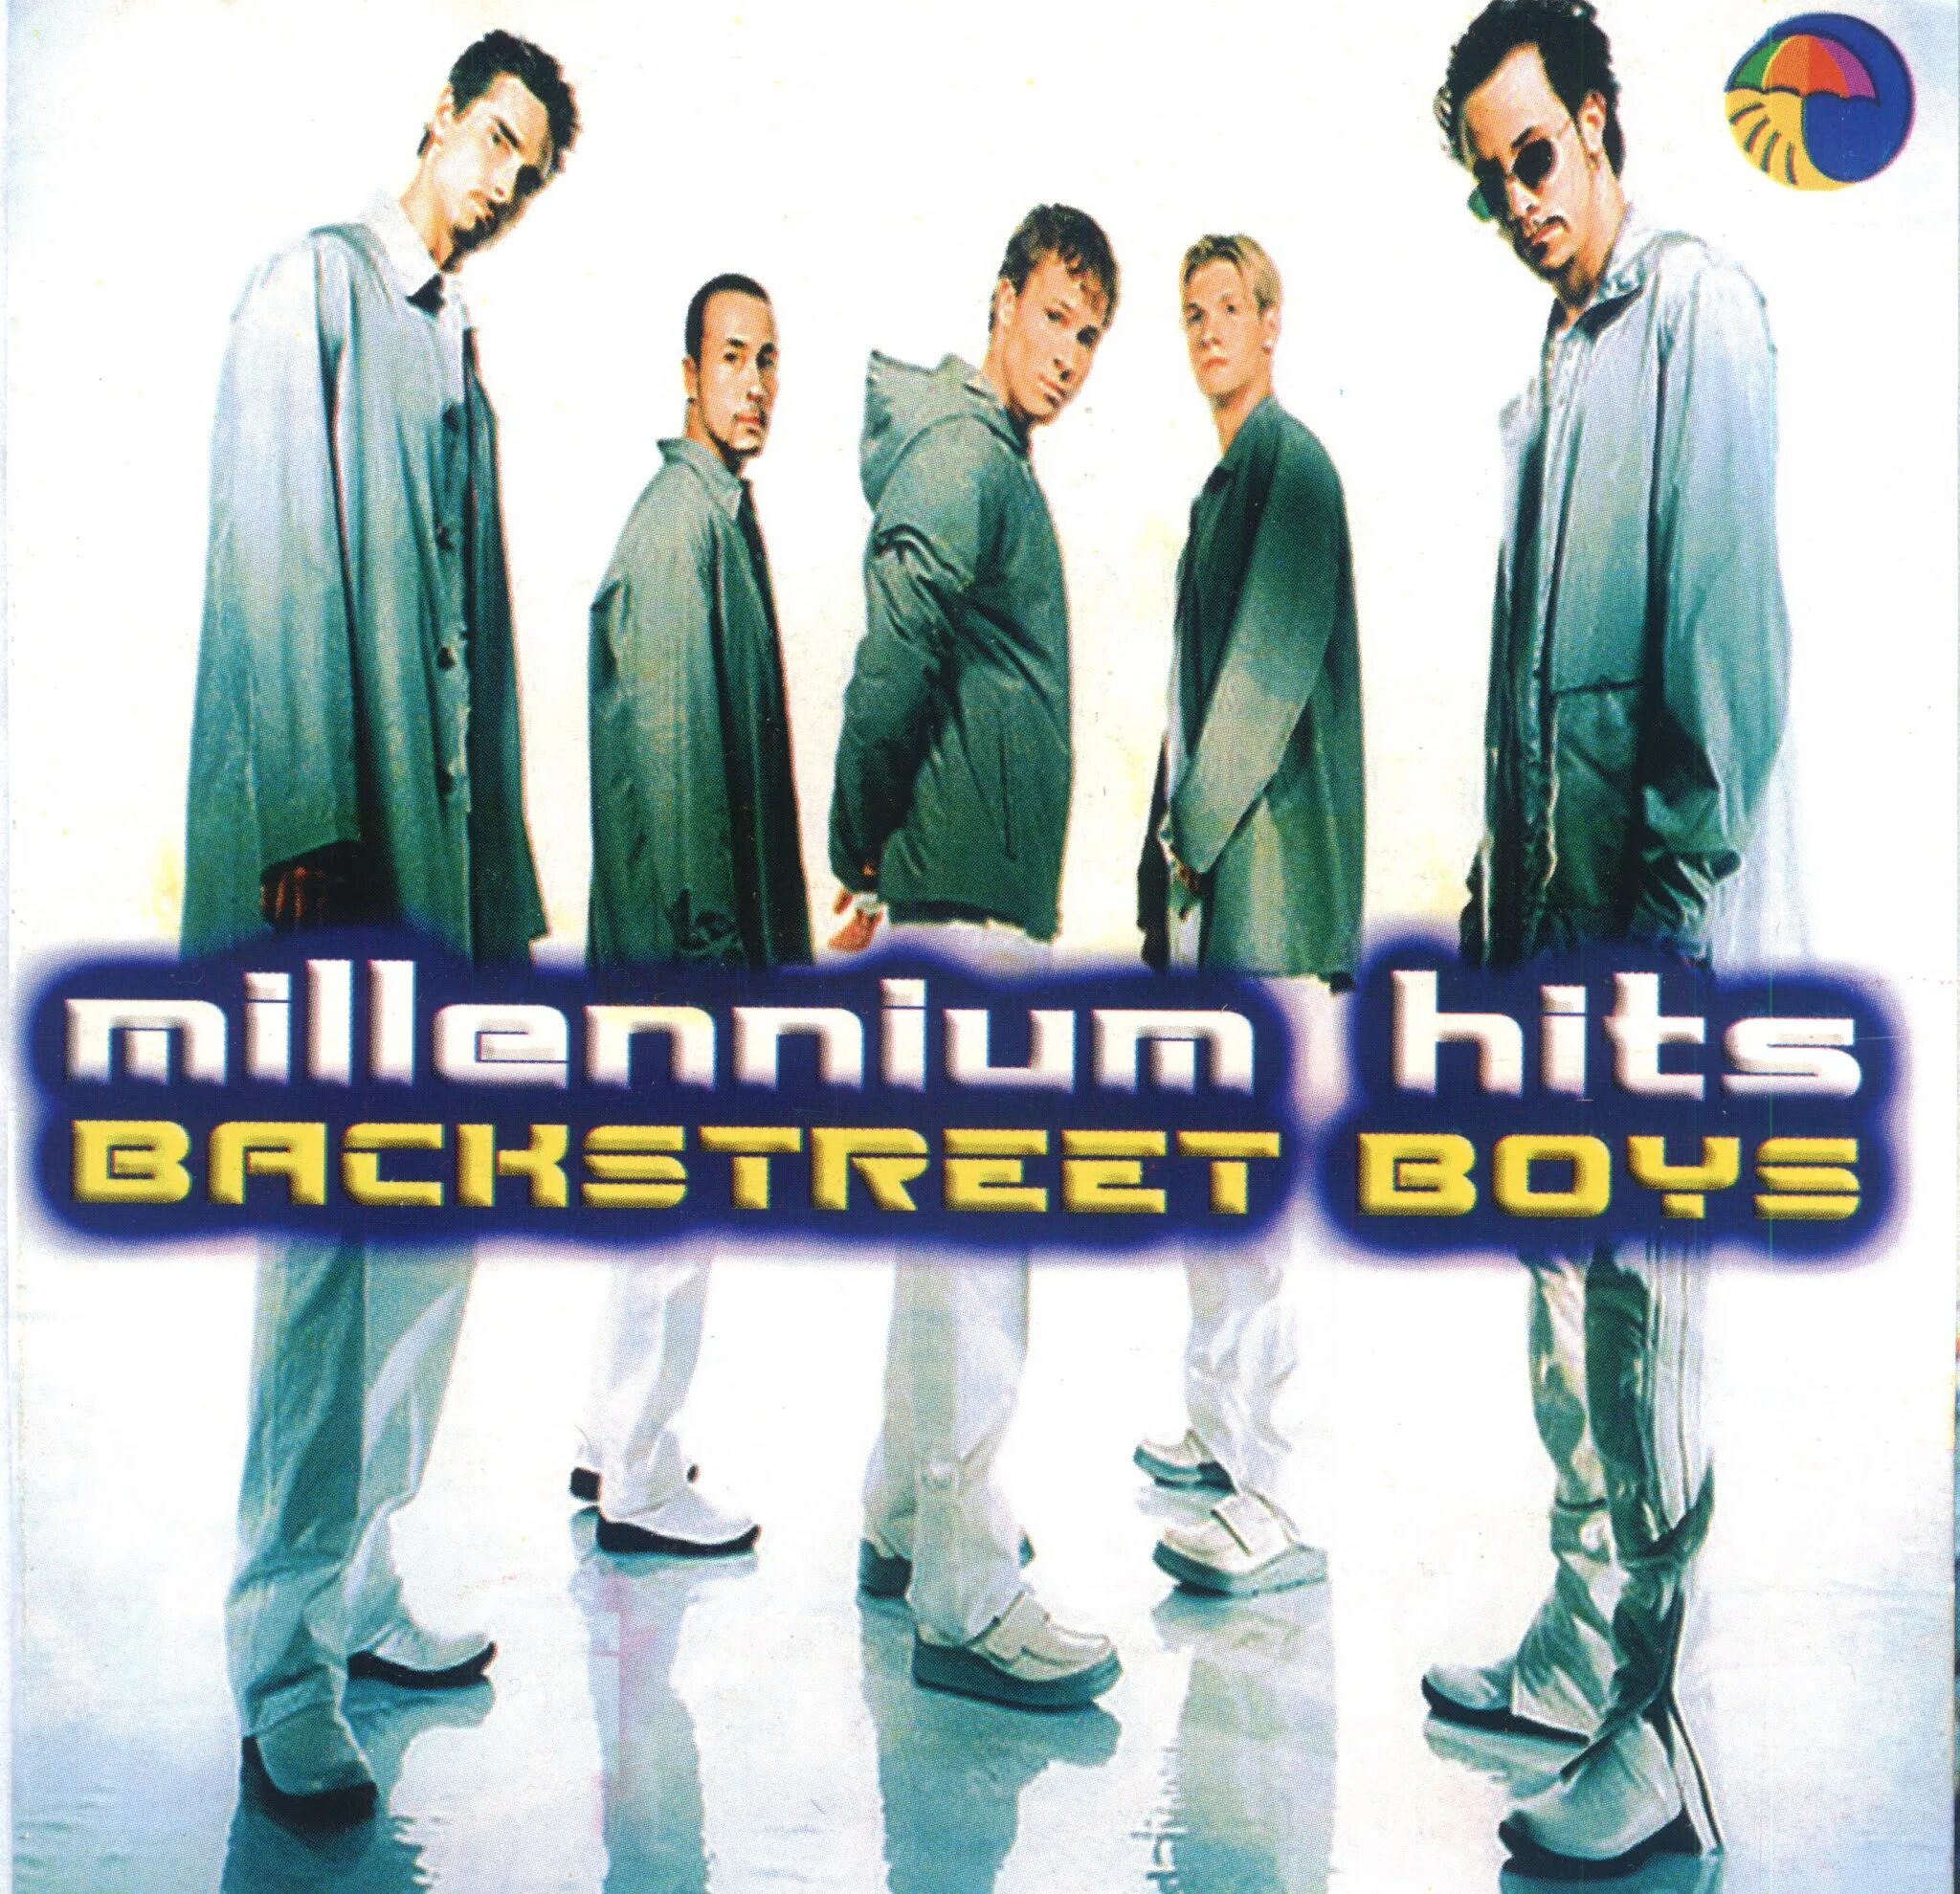 Миллениум 1999 Backstreet boys. Backstreet boys Millennium альбом. Backstreet boys обложка. Millennium Backstreet boys обложка. Backstreet s back